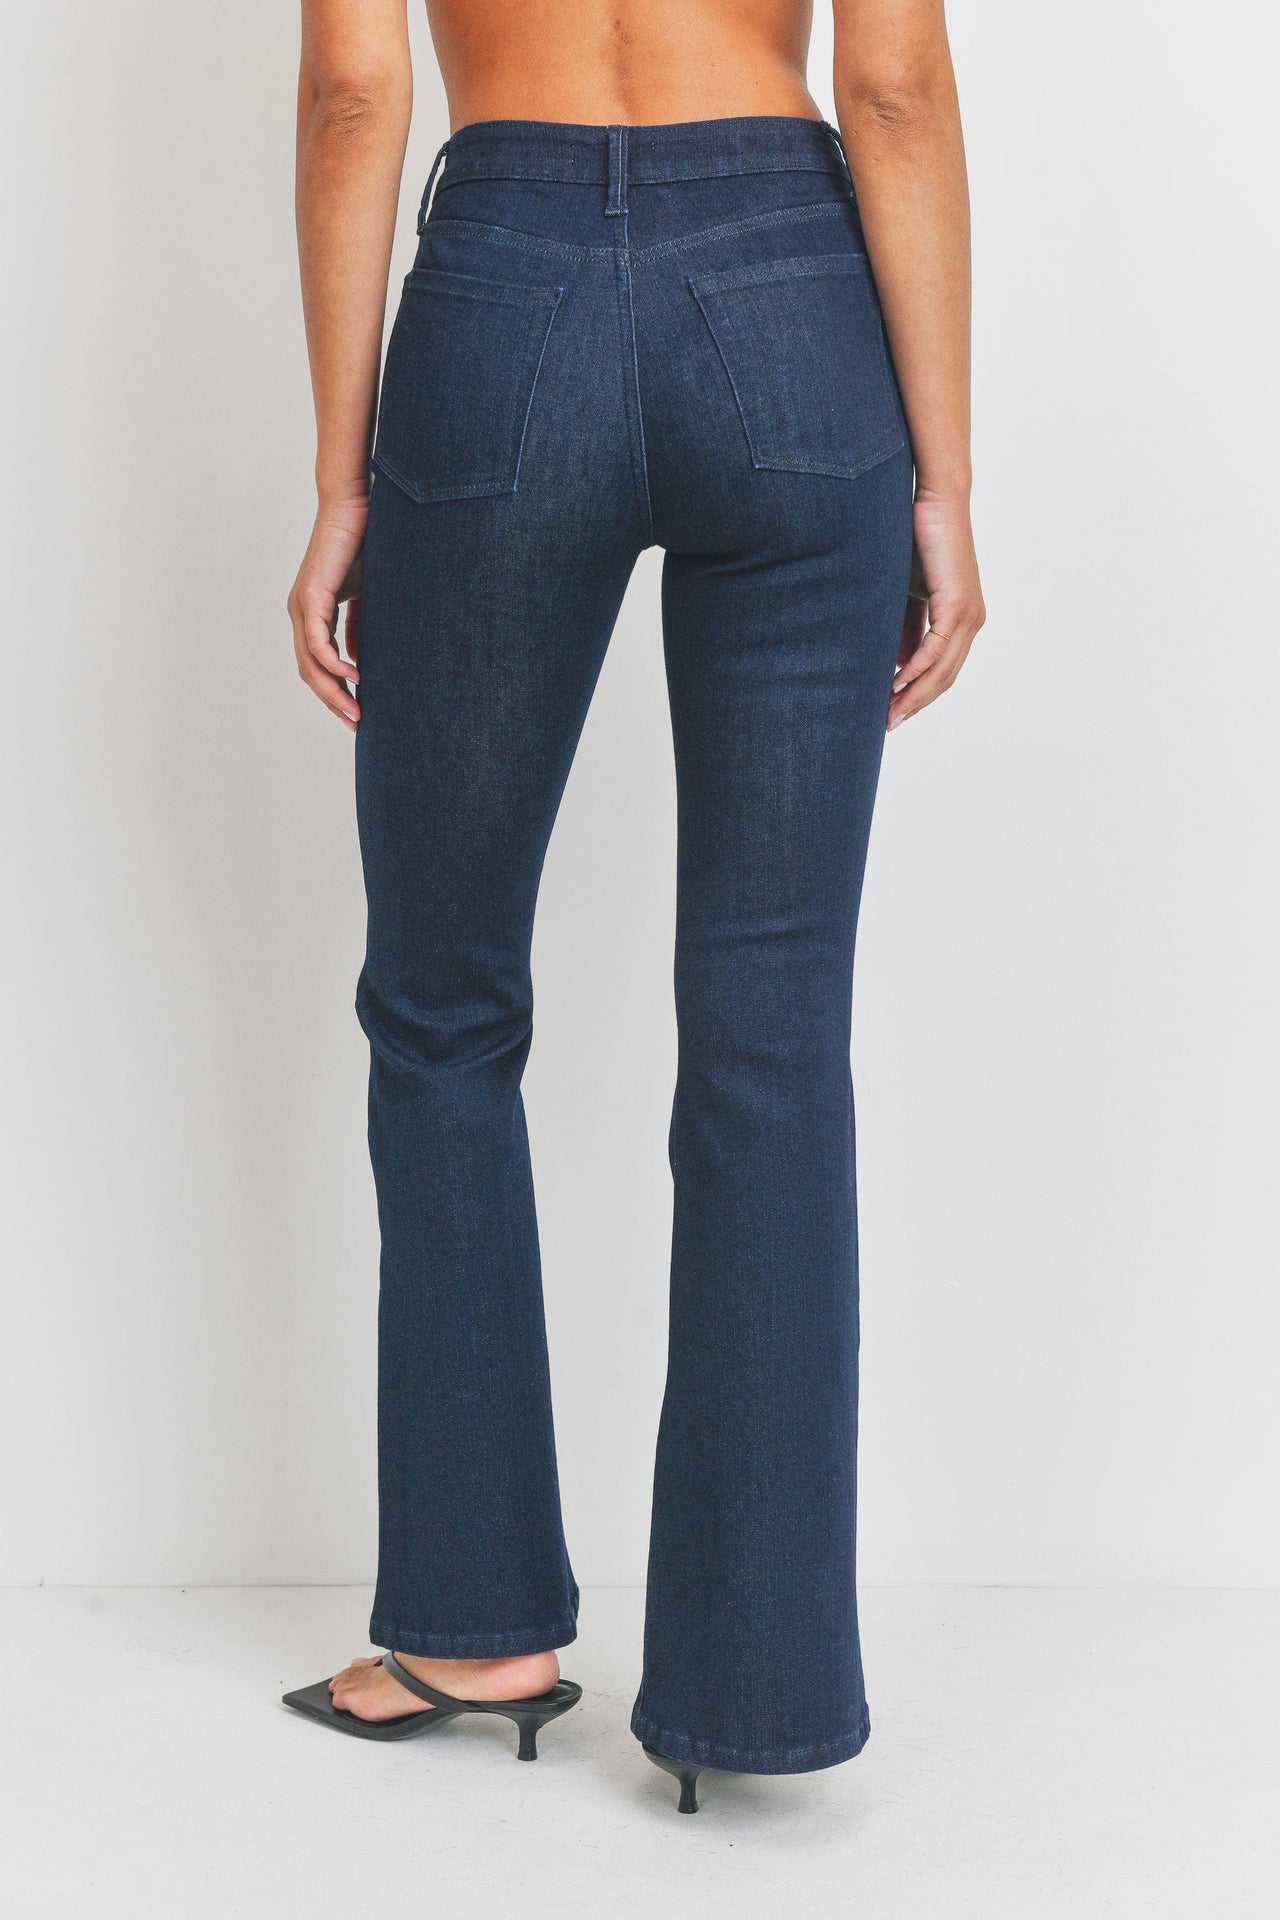 Roxy Flare Jeans Indigo, Denim by Just Black | LIT Boutique